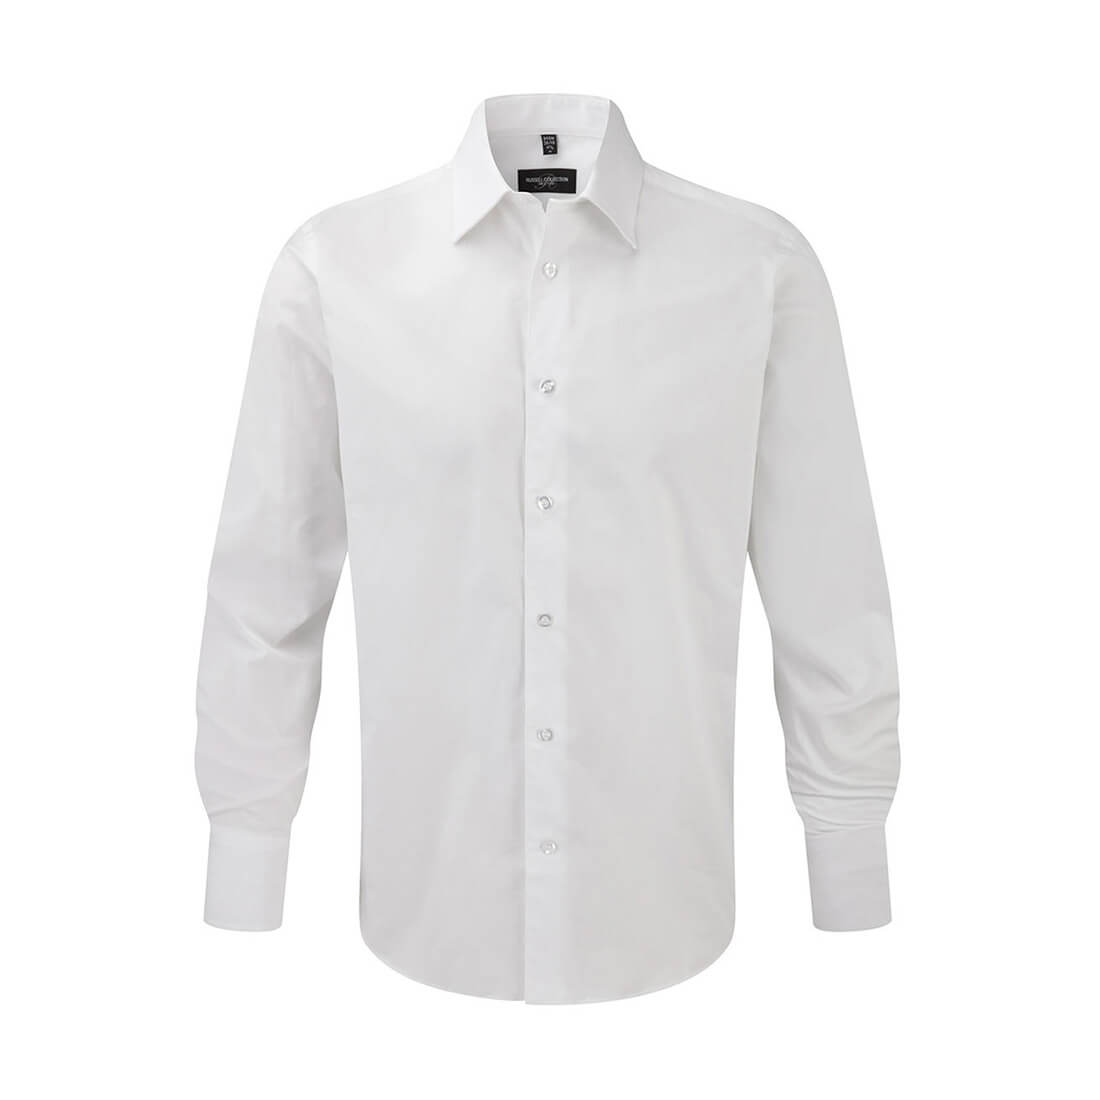 Fitted Long Sleeve Stretch Shirt - Les vêtements de protection